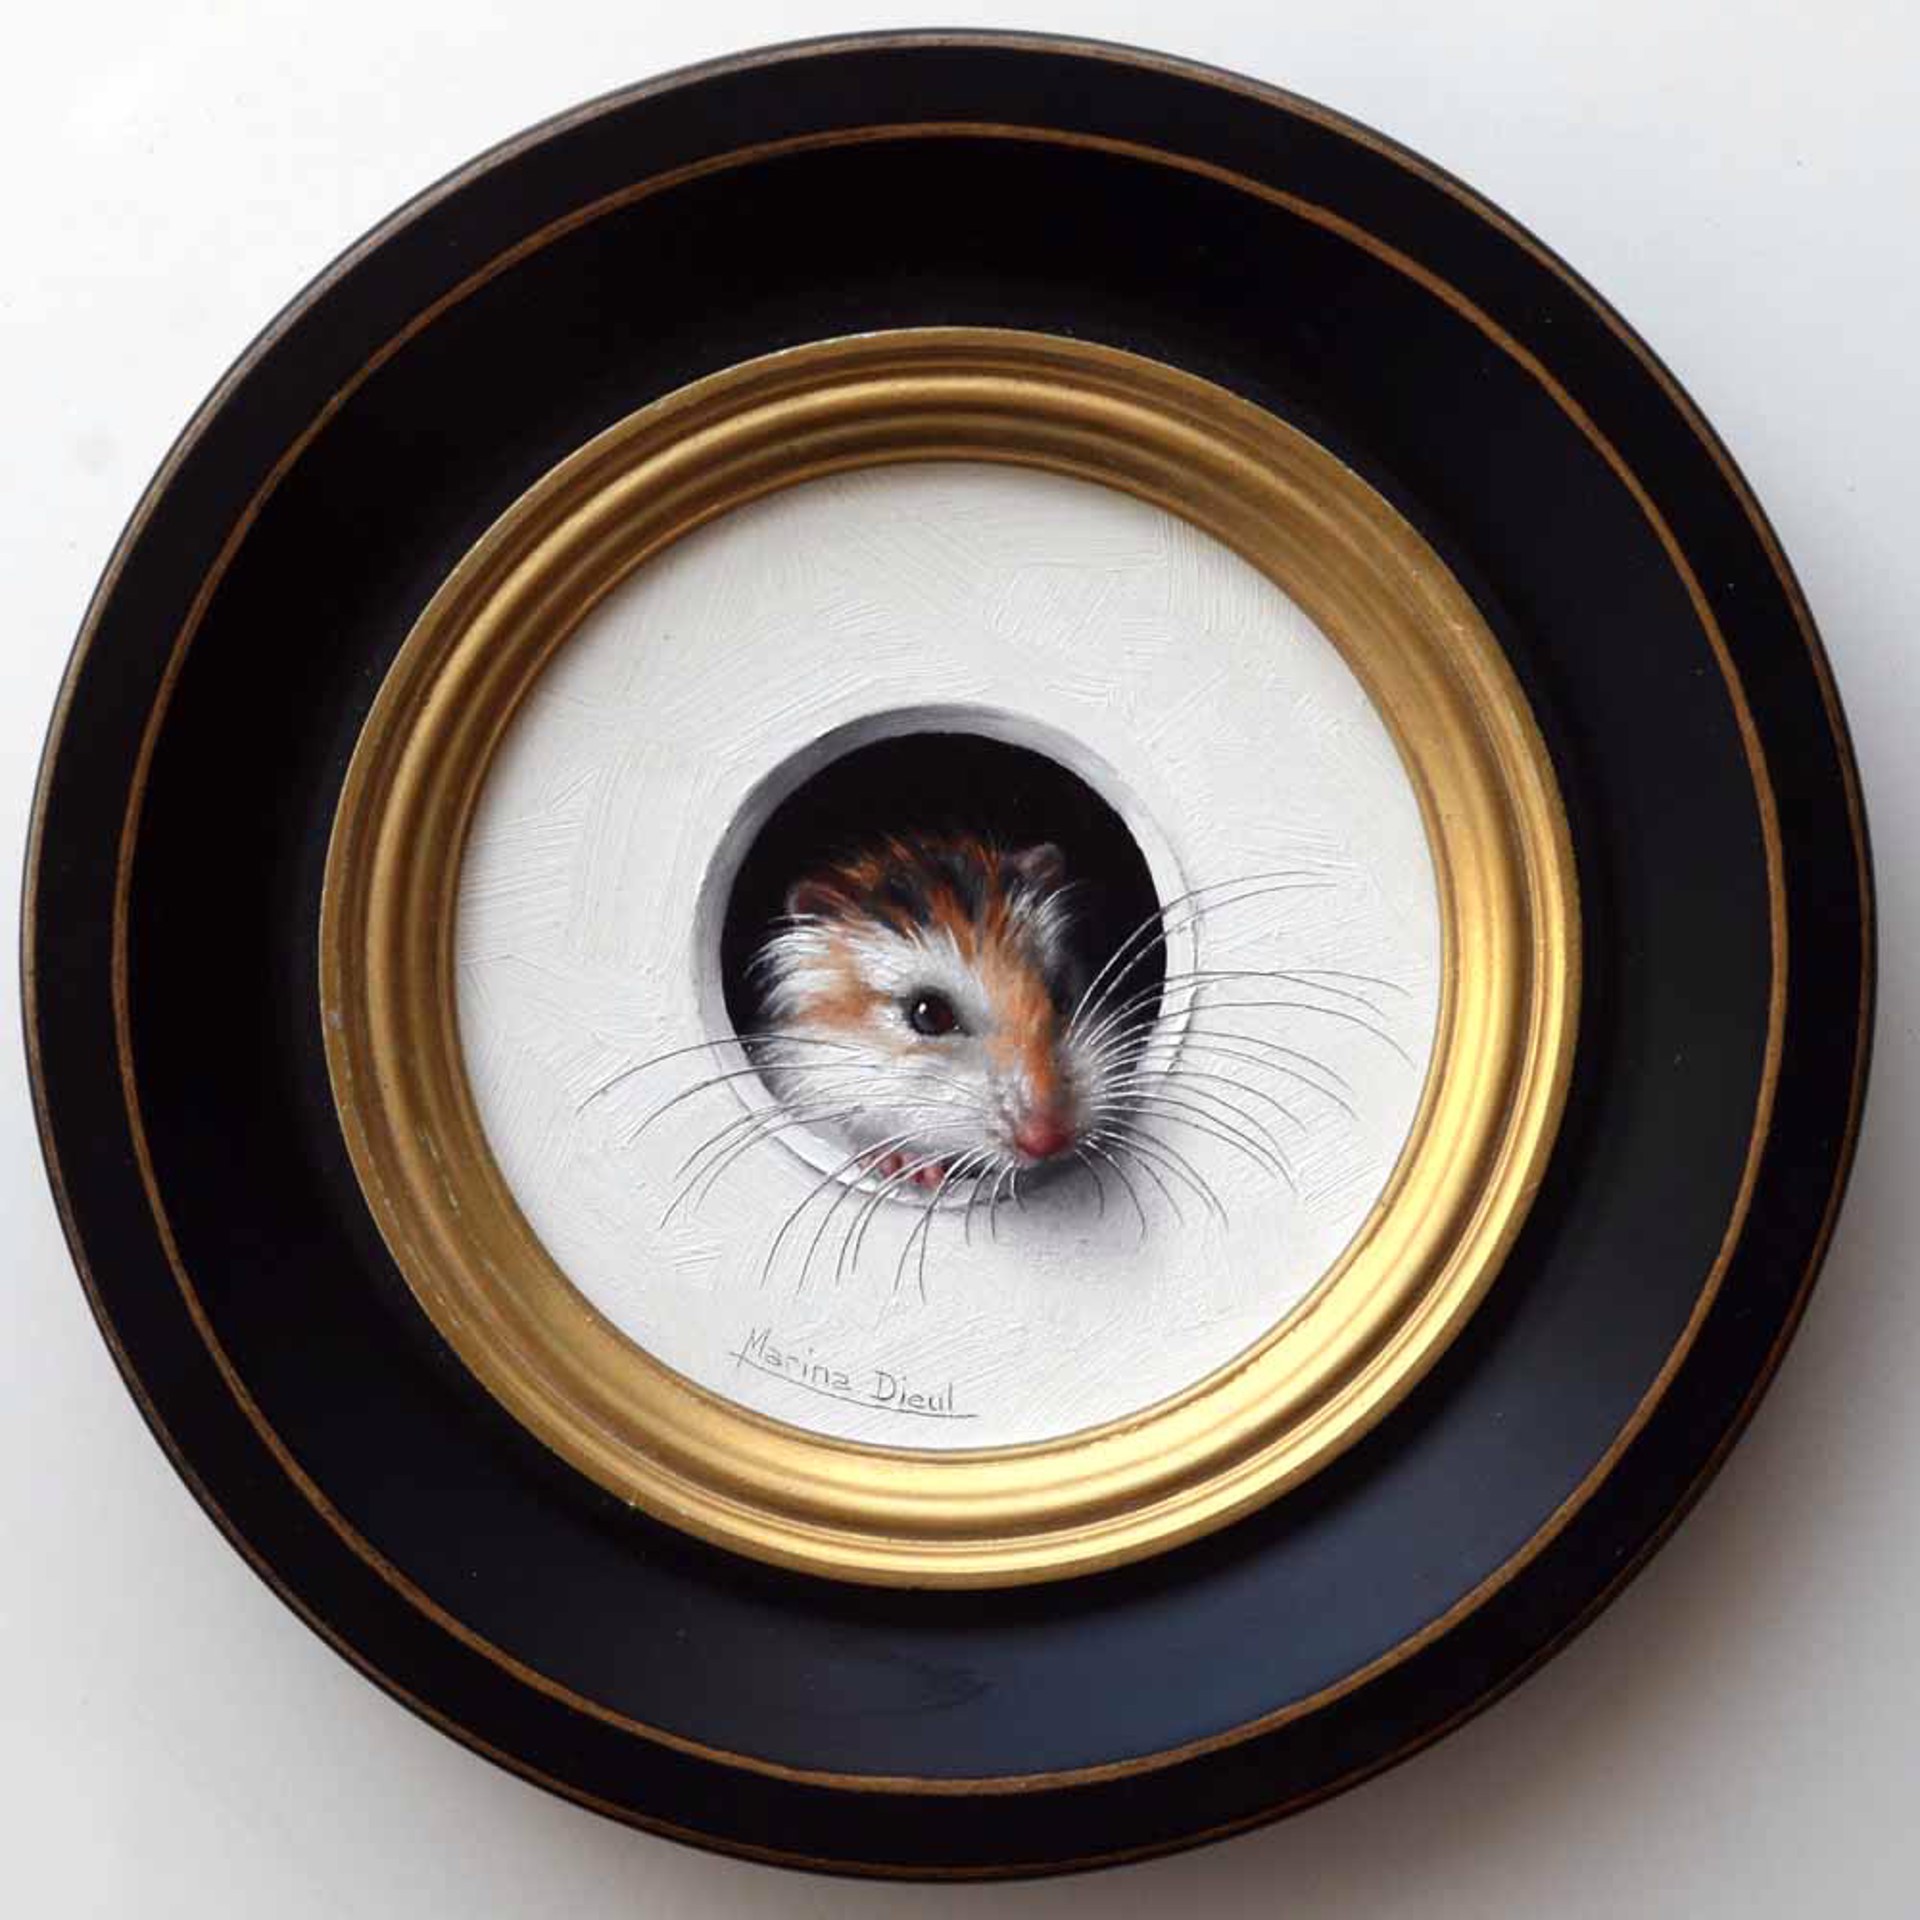 Mini Hamster 6 by Marina Dieul